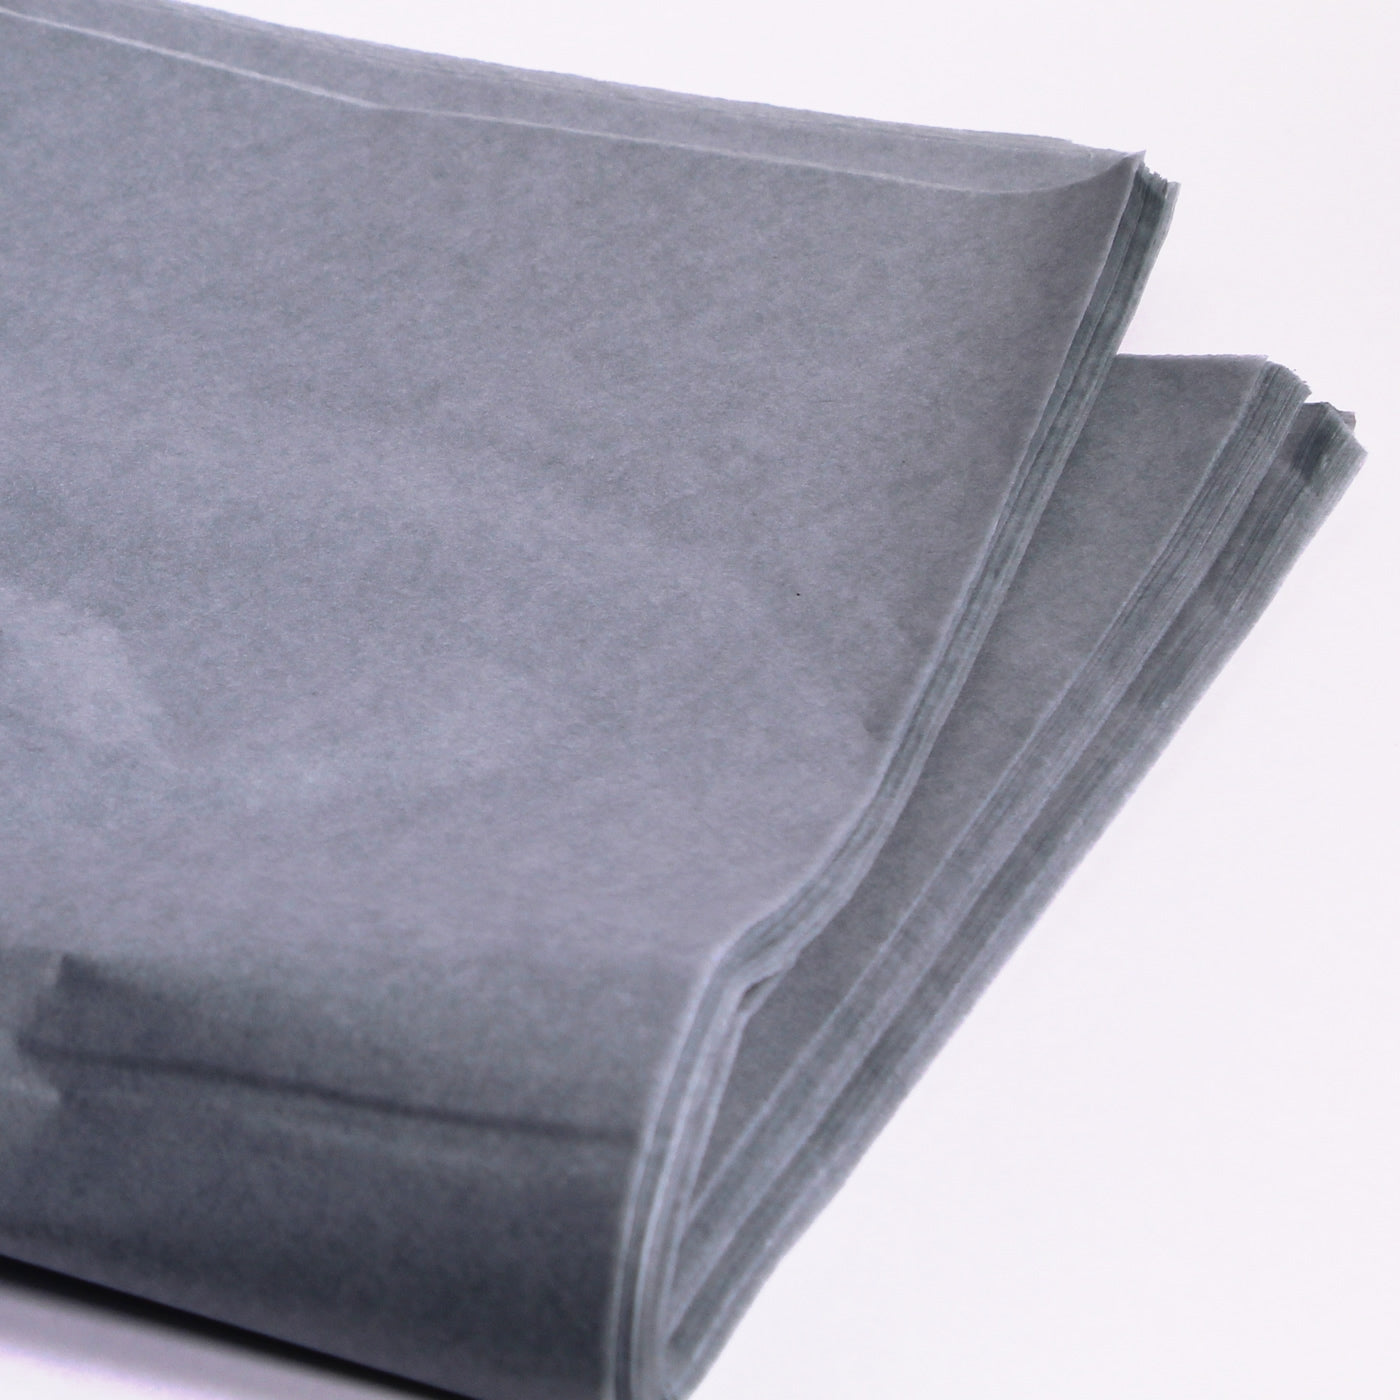 Grey tissue sheets